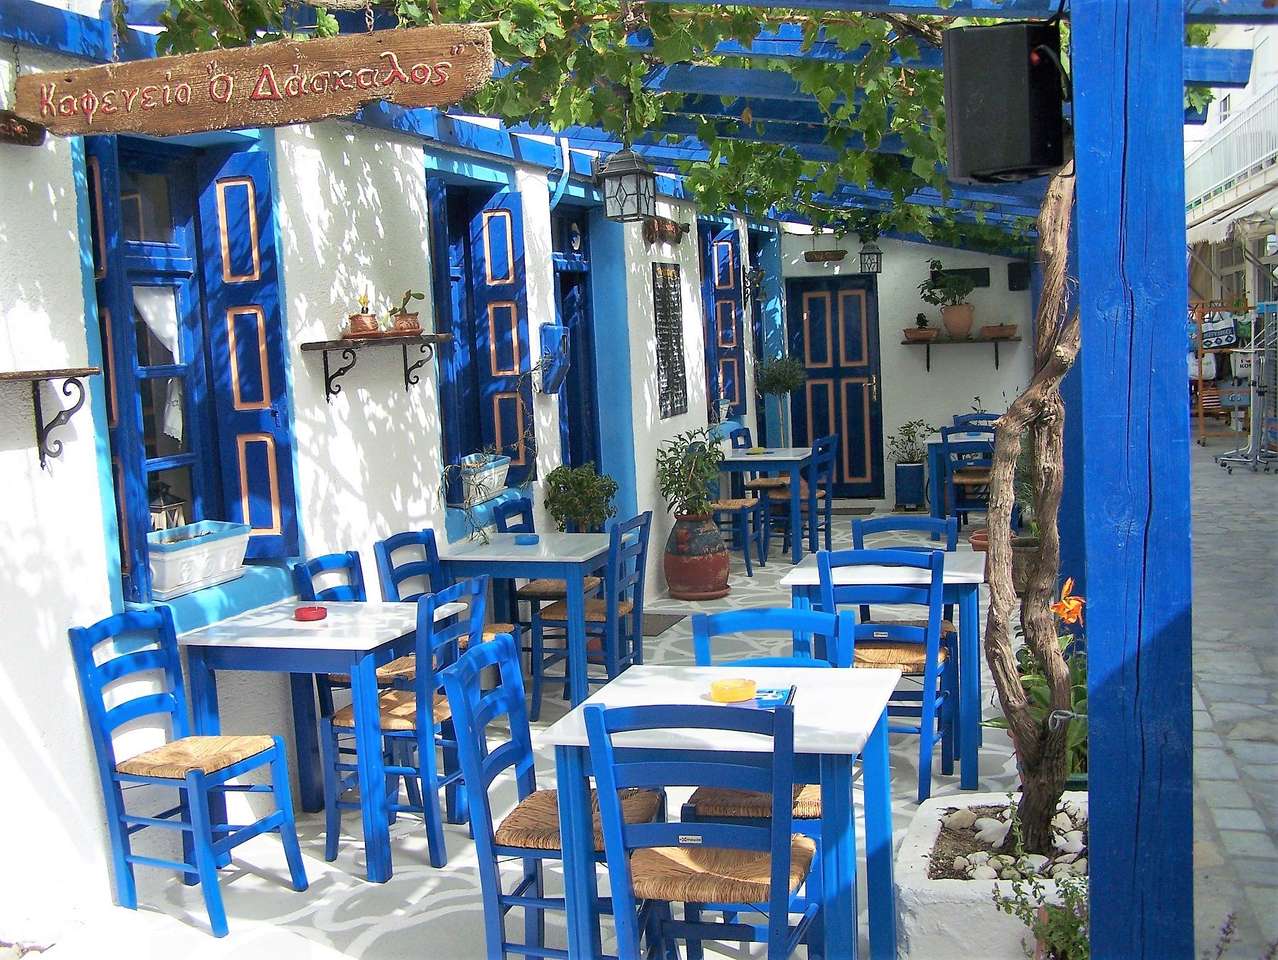 Greek island of Kos jigsaw puzzle online